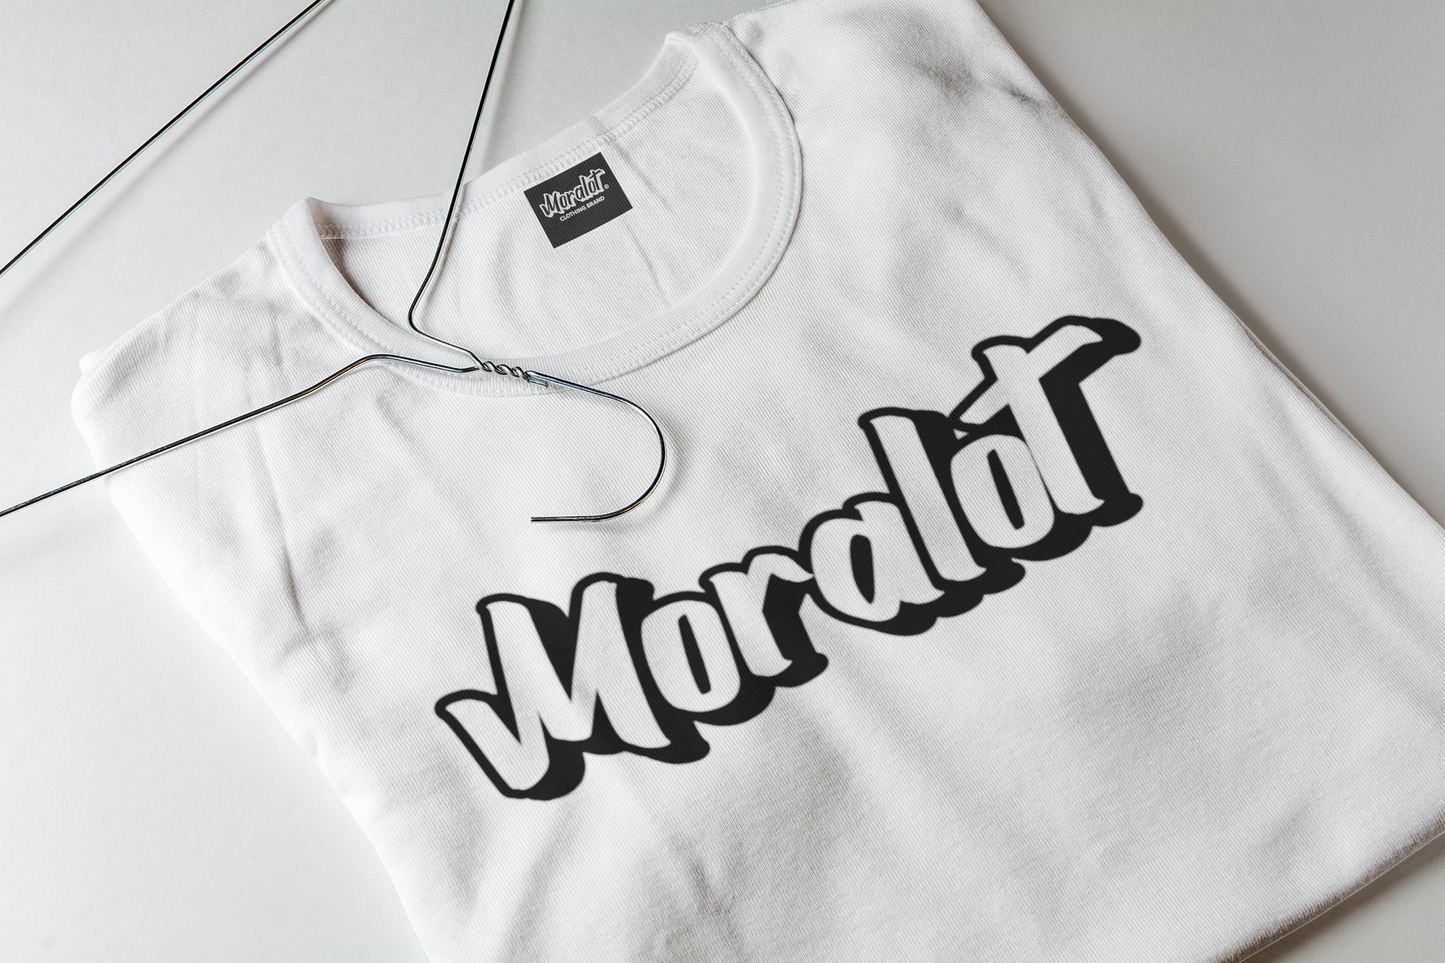 Moralot T-Shirts